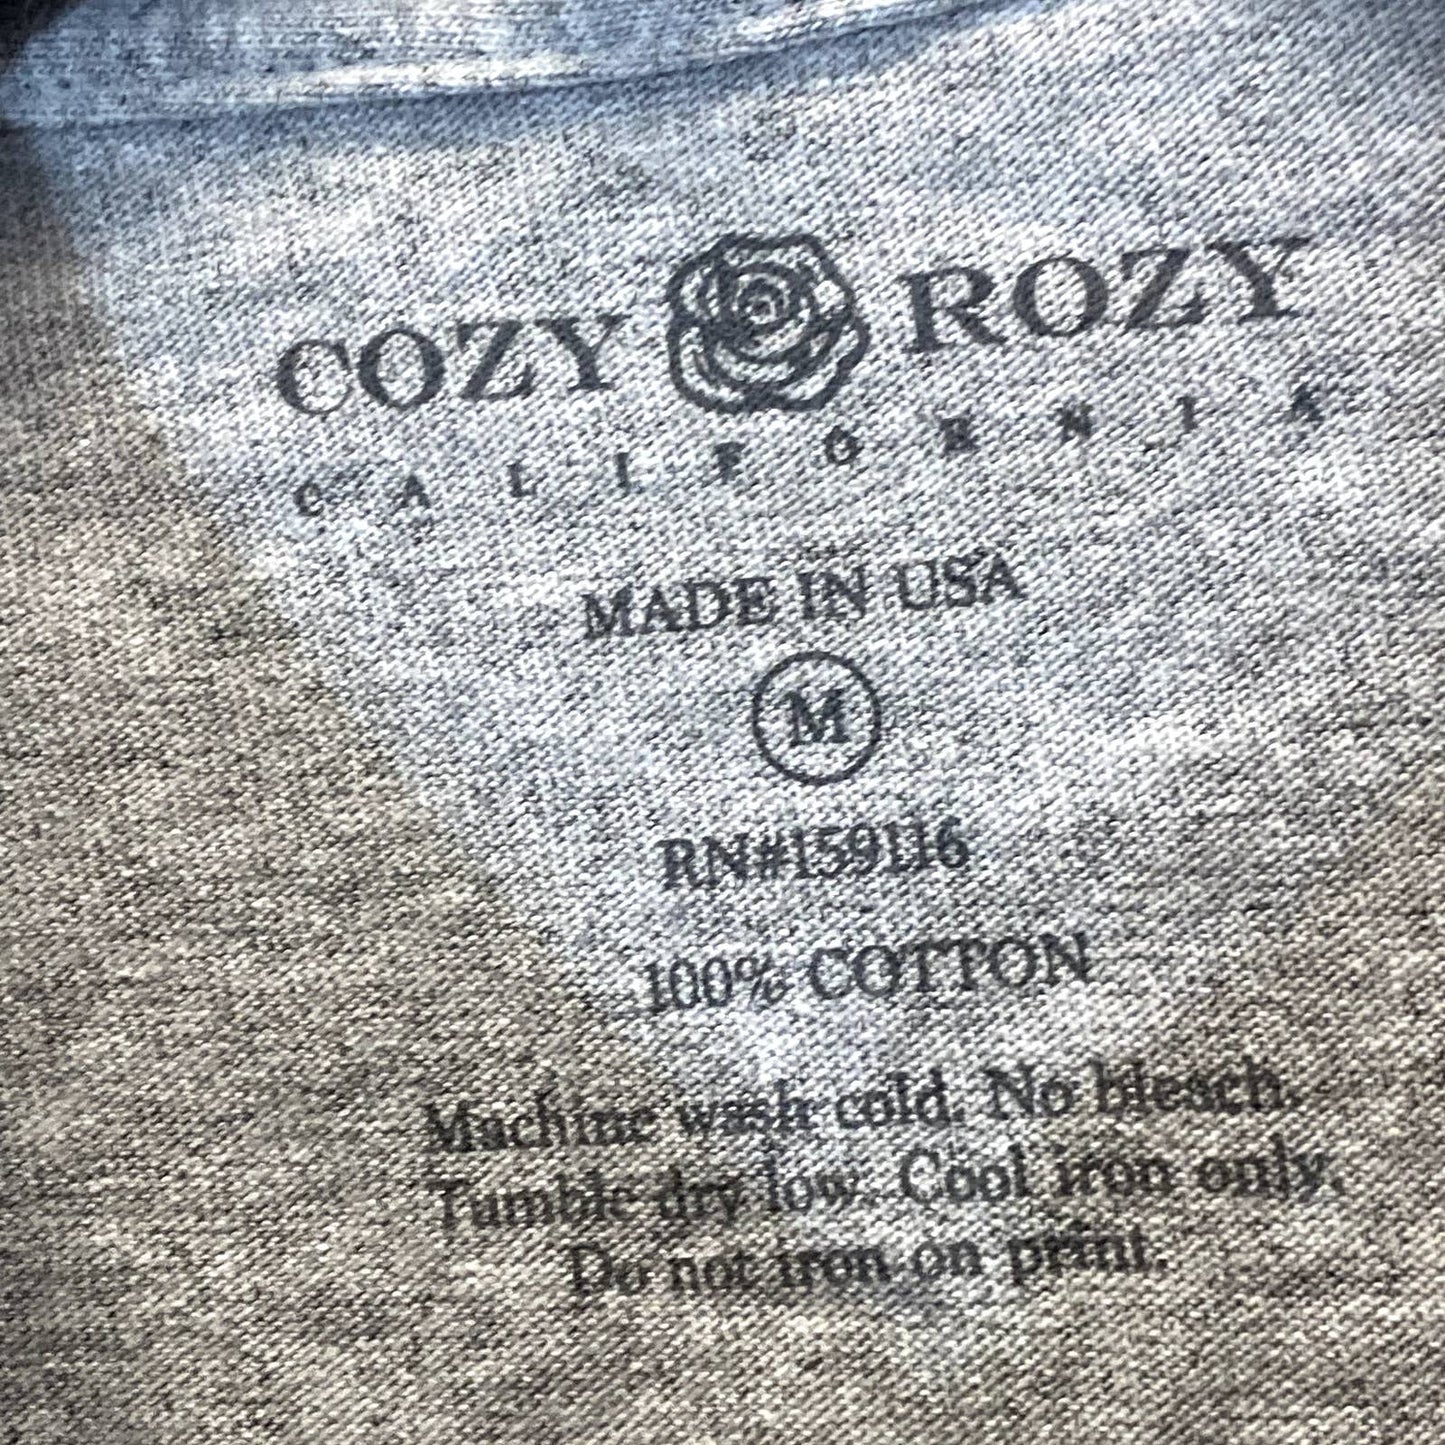 COZY ROZY Women's Heather Charcoal Graphic Crewneck Long Sleeve Raw Hem T-Shirt SZ M